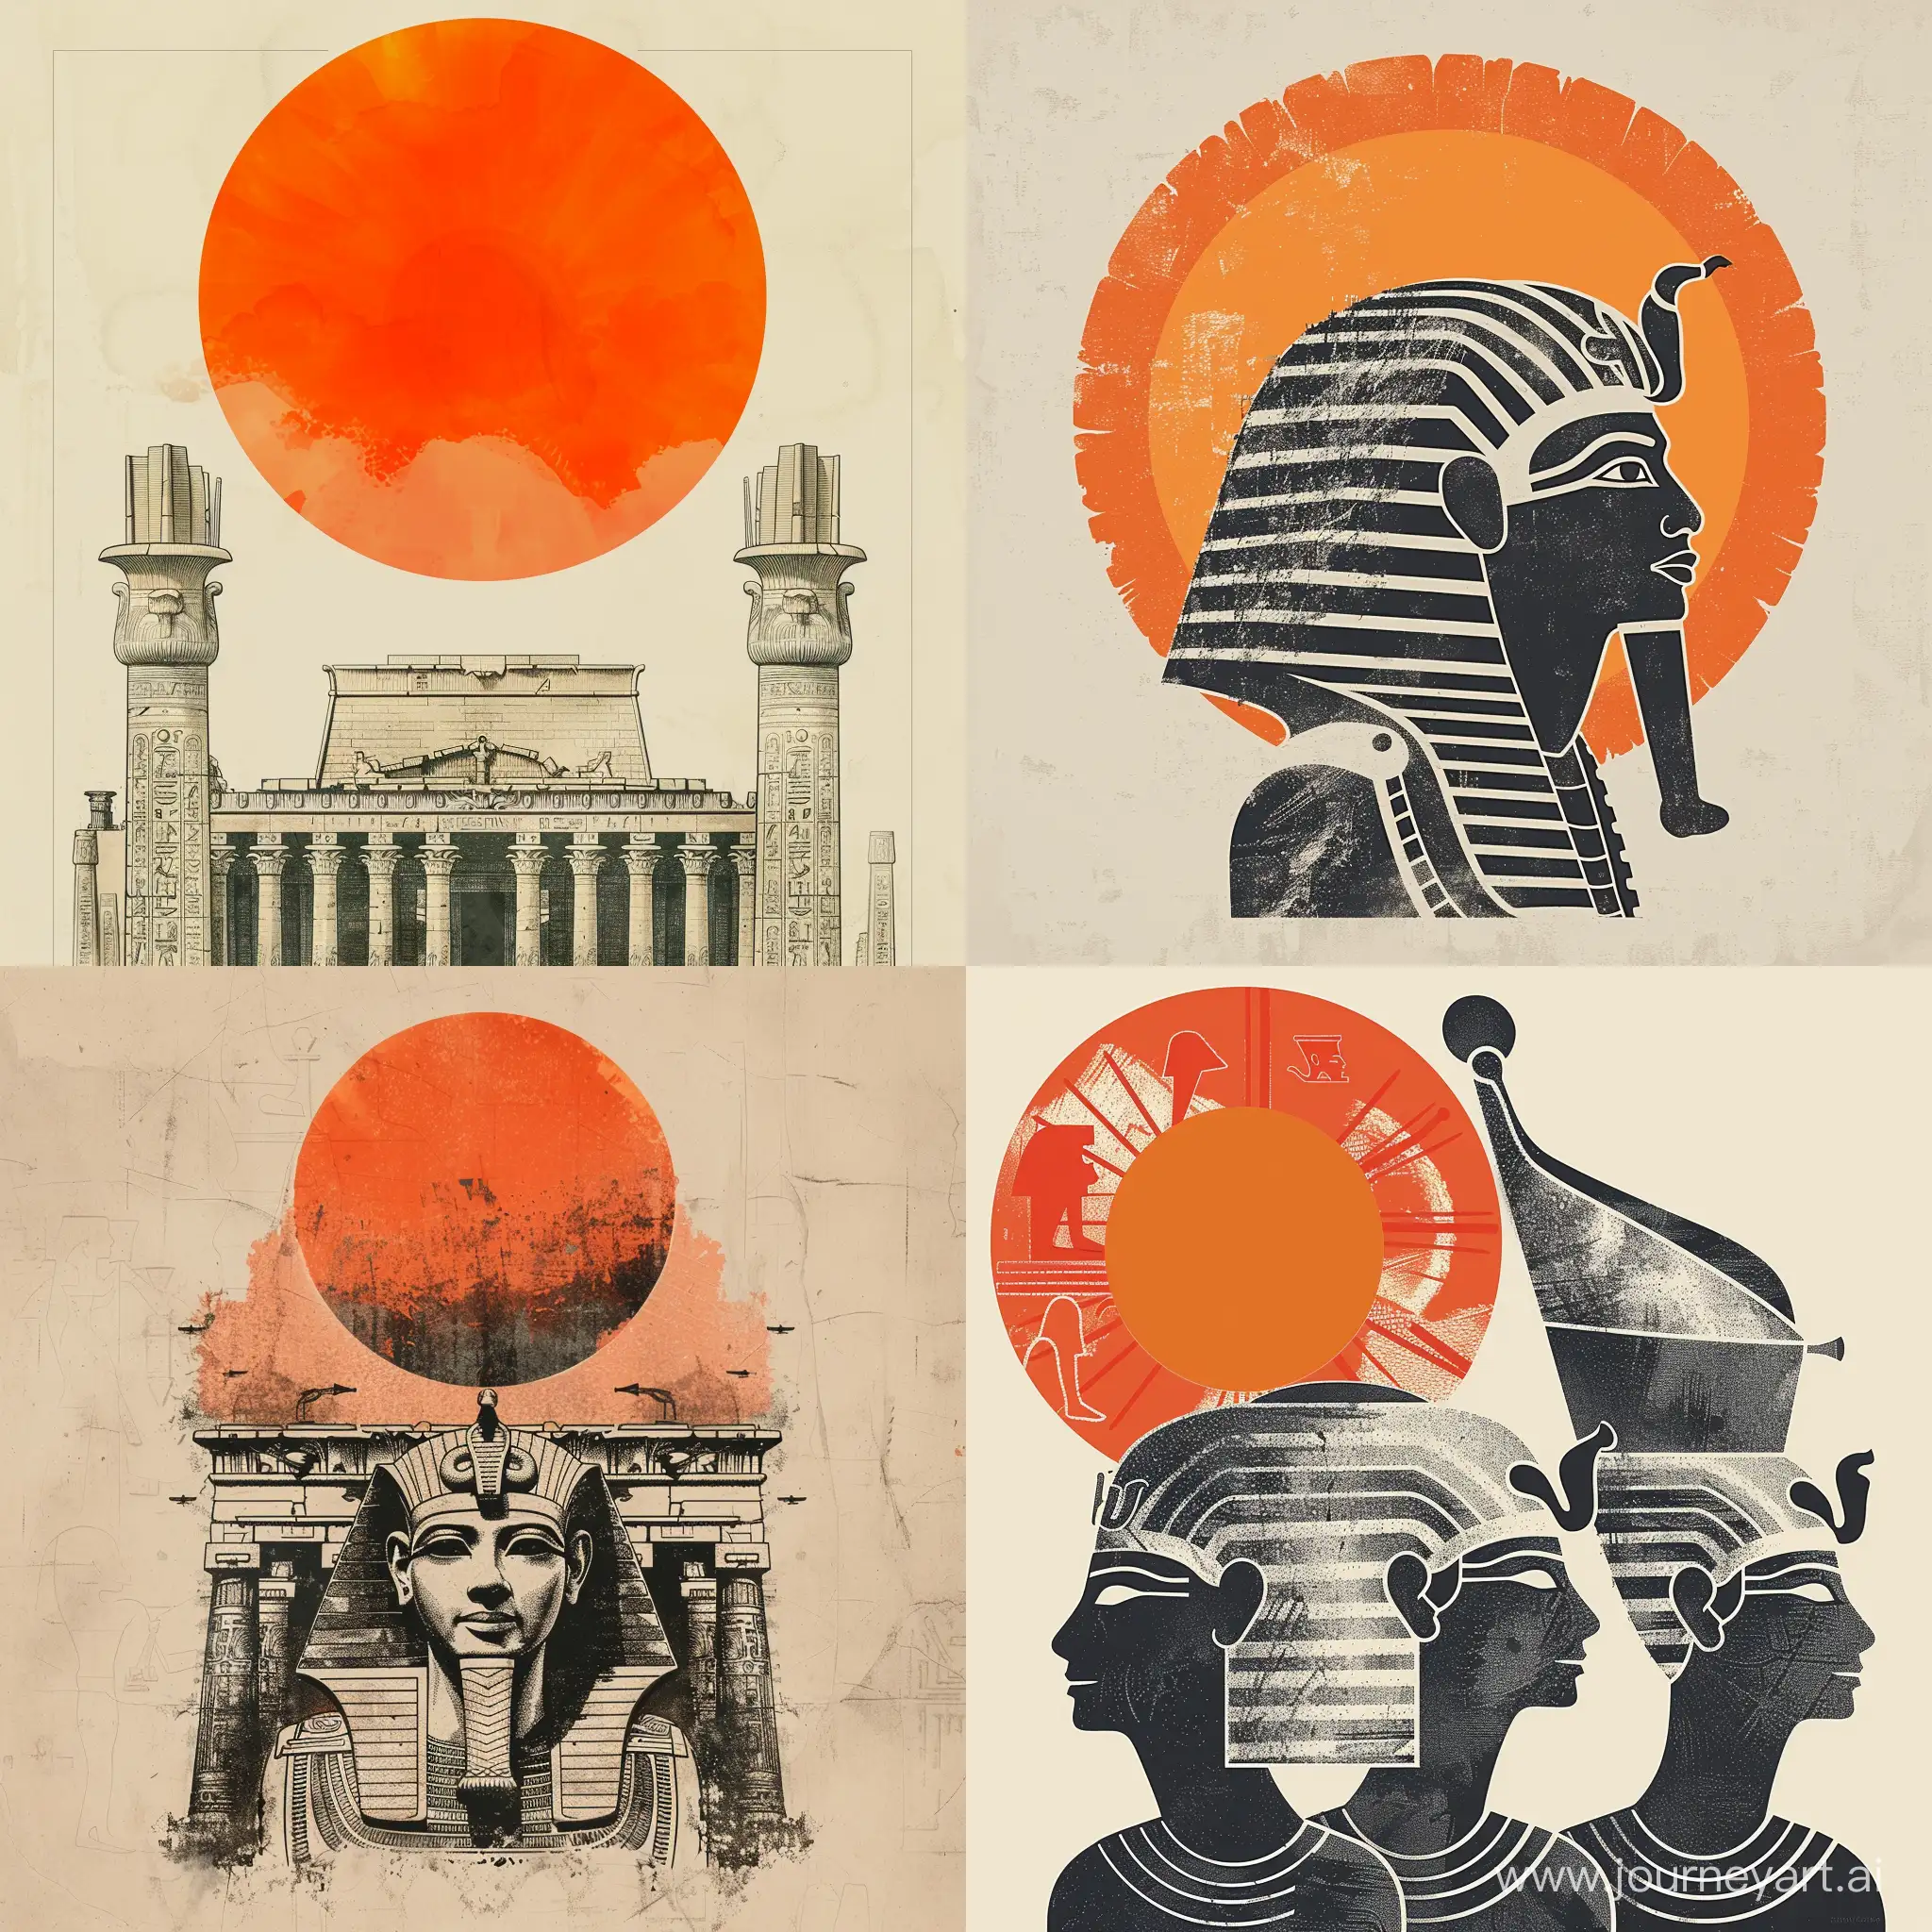 Pharaonic-Civilization-Depicted-with-Vibrant-Orange-Sun